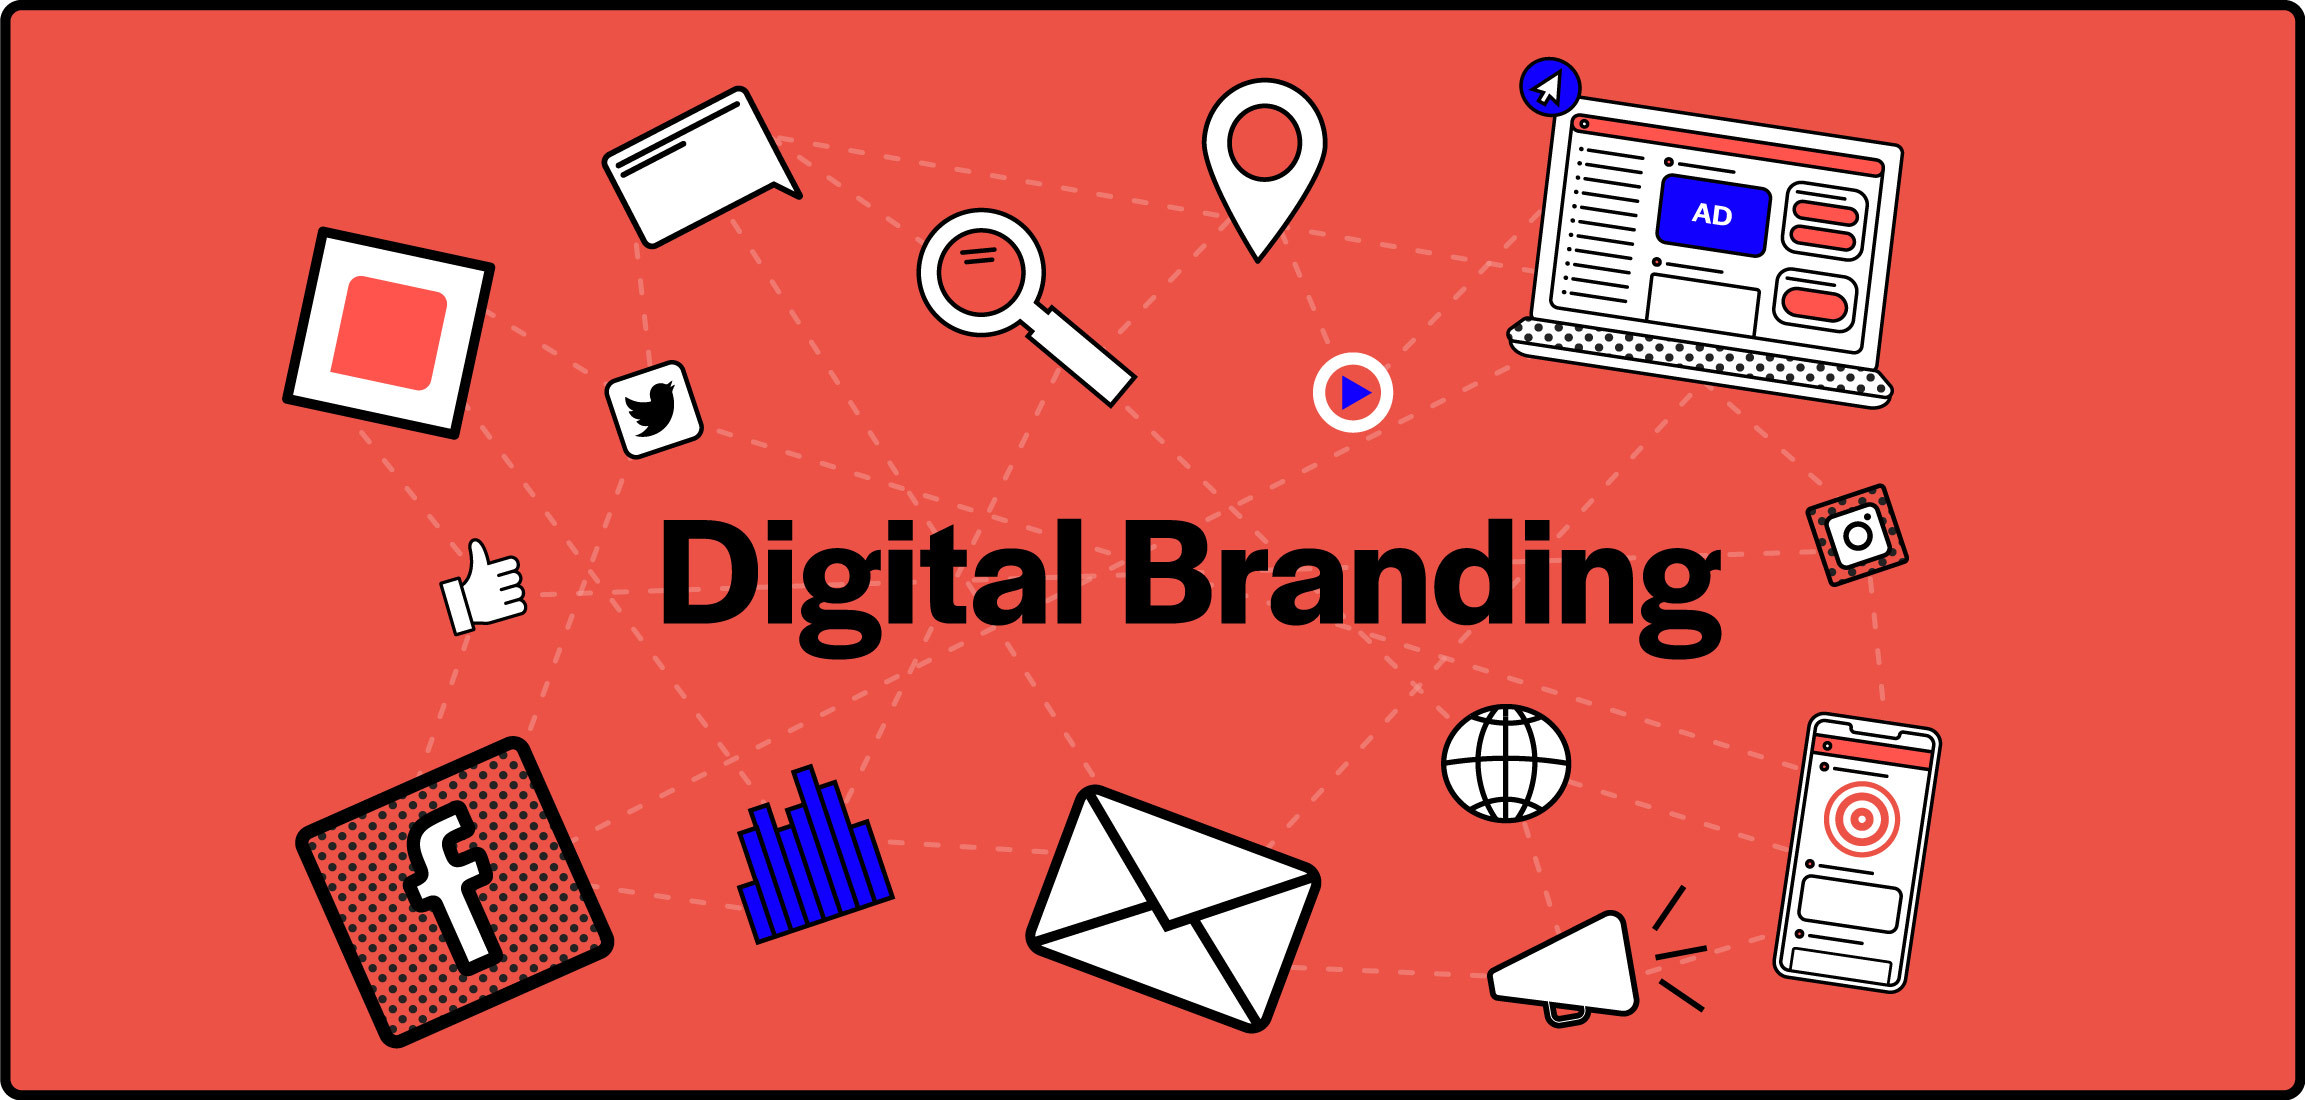 Digital Branding Illustration - Square 205